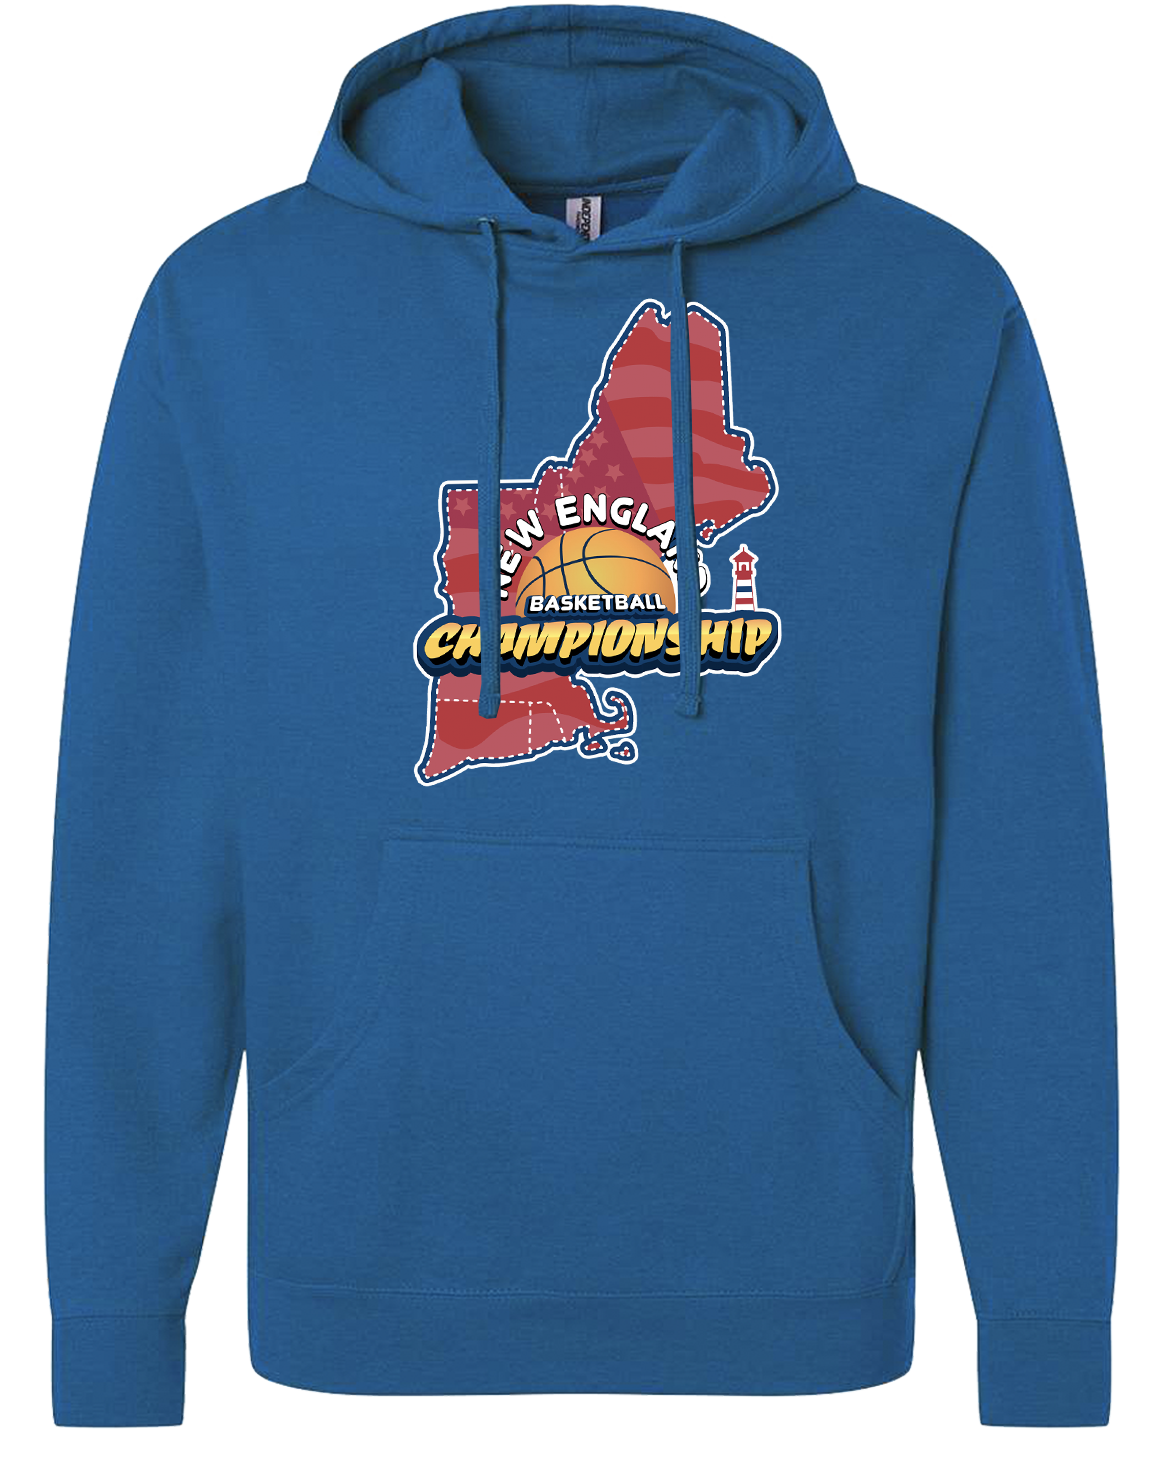 Heather Blue New England State Basketball Sweatshirt